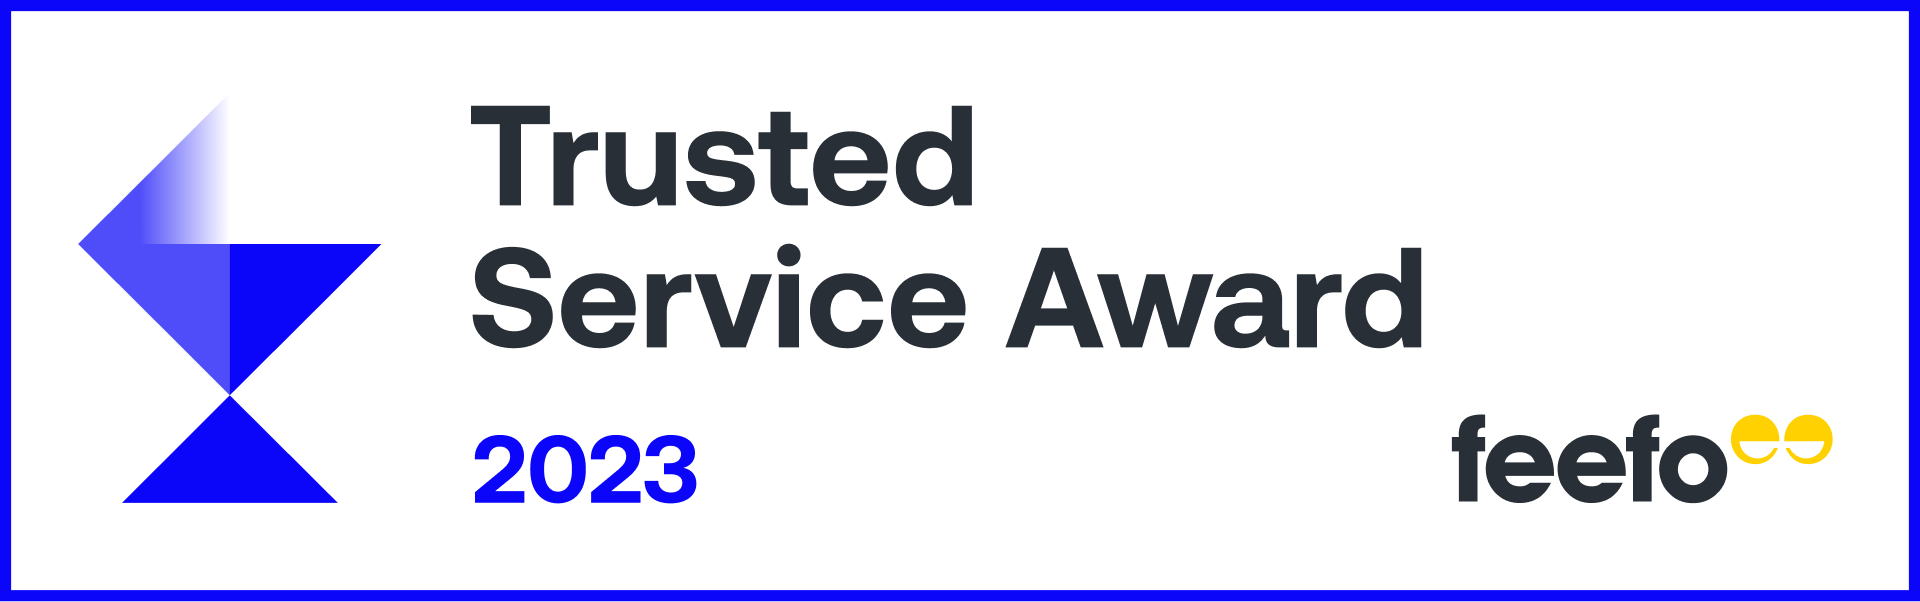 Trusted Service Award 2023 - Feefo Interfuels